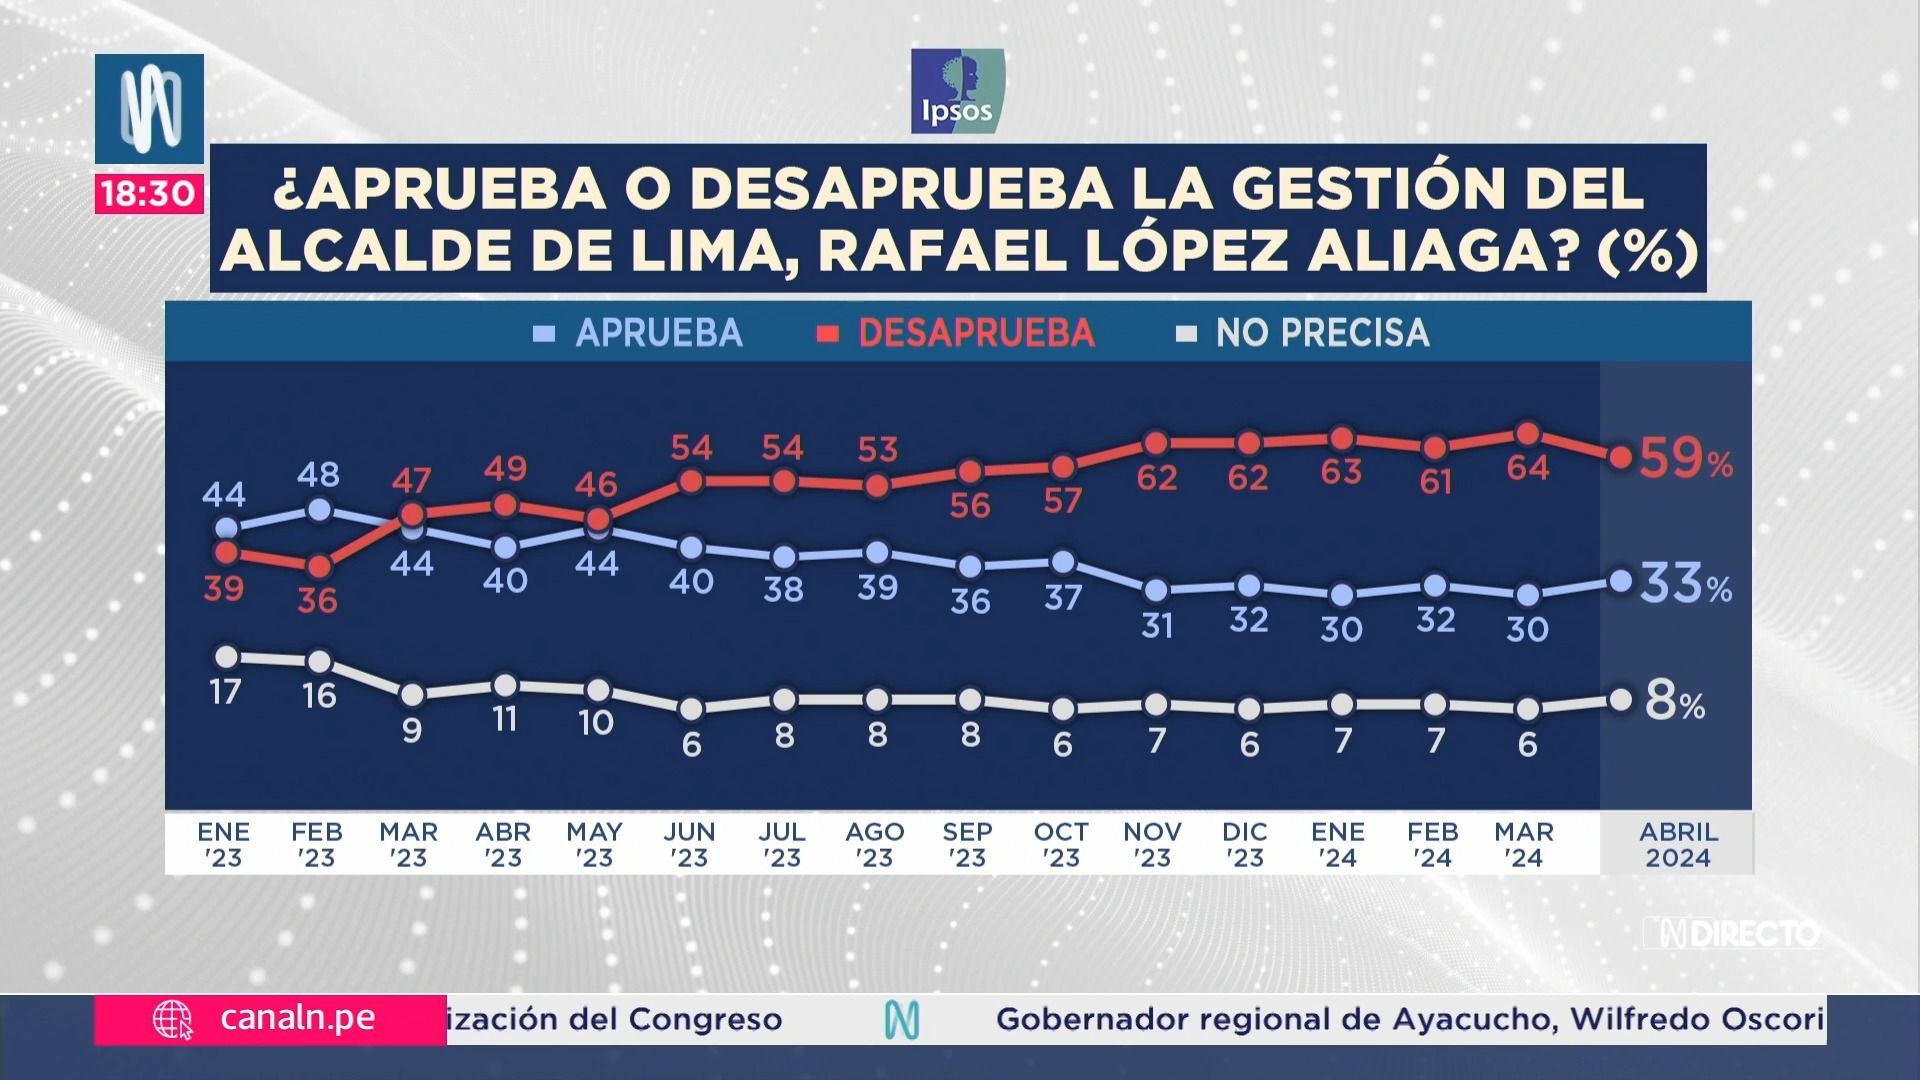 Ipsos-Canal N: Rafael López Aliaga obtuvo 59% de desaprobación